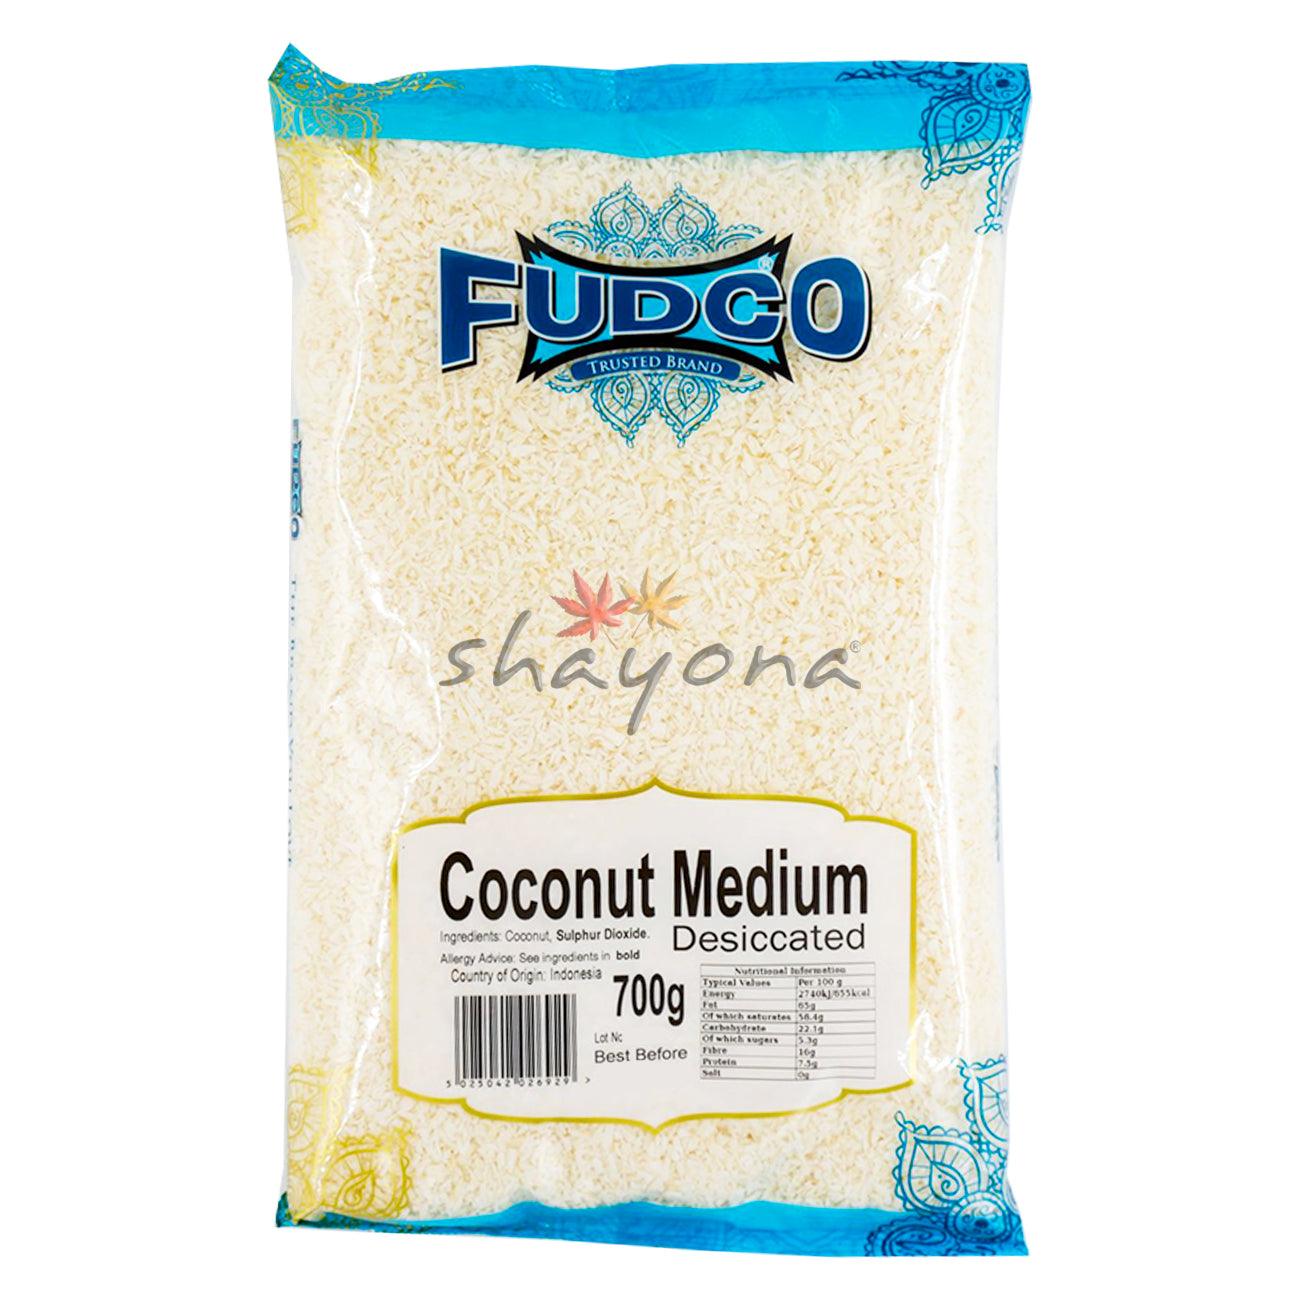 Fudco Coconut Medium - Shayona UK